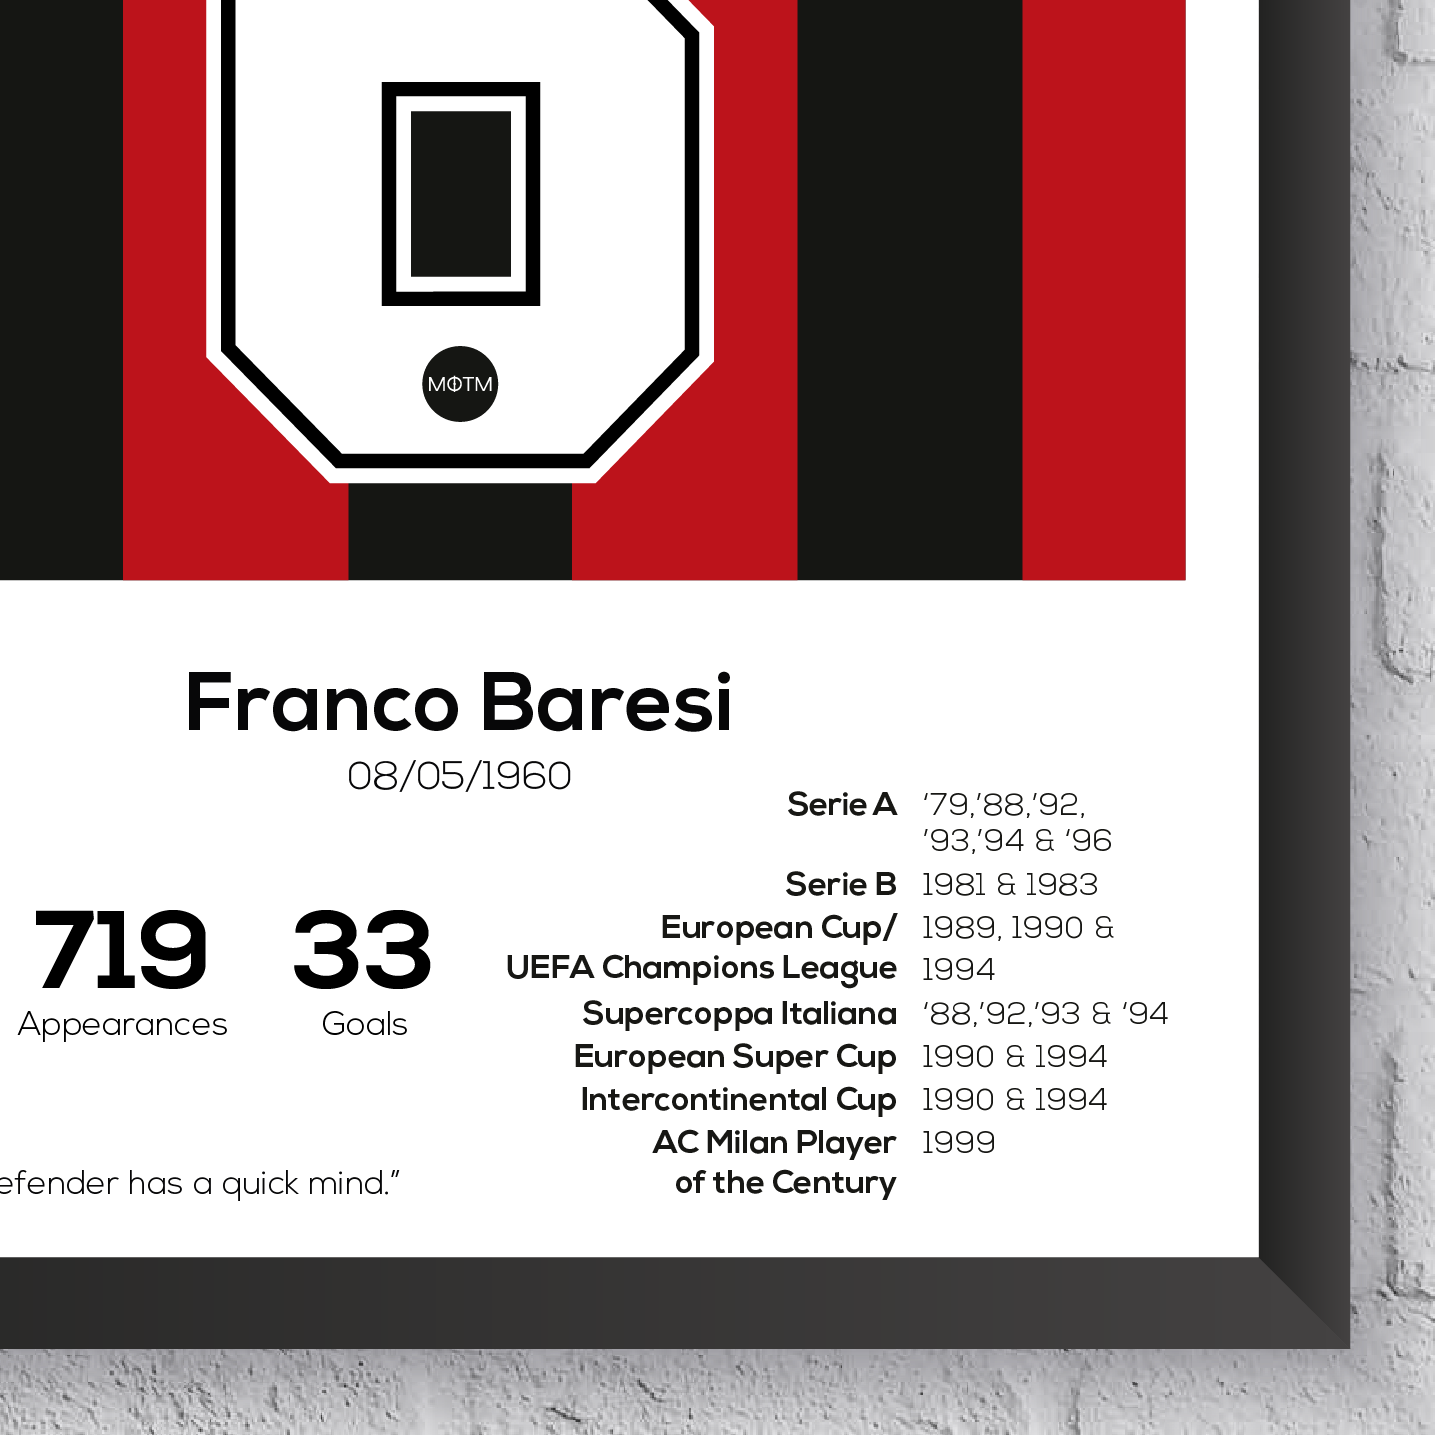 Franco Baresi AC Milan Legend Stats Football Print